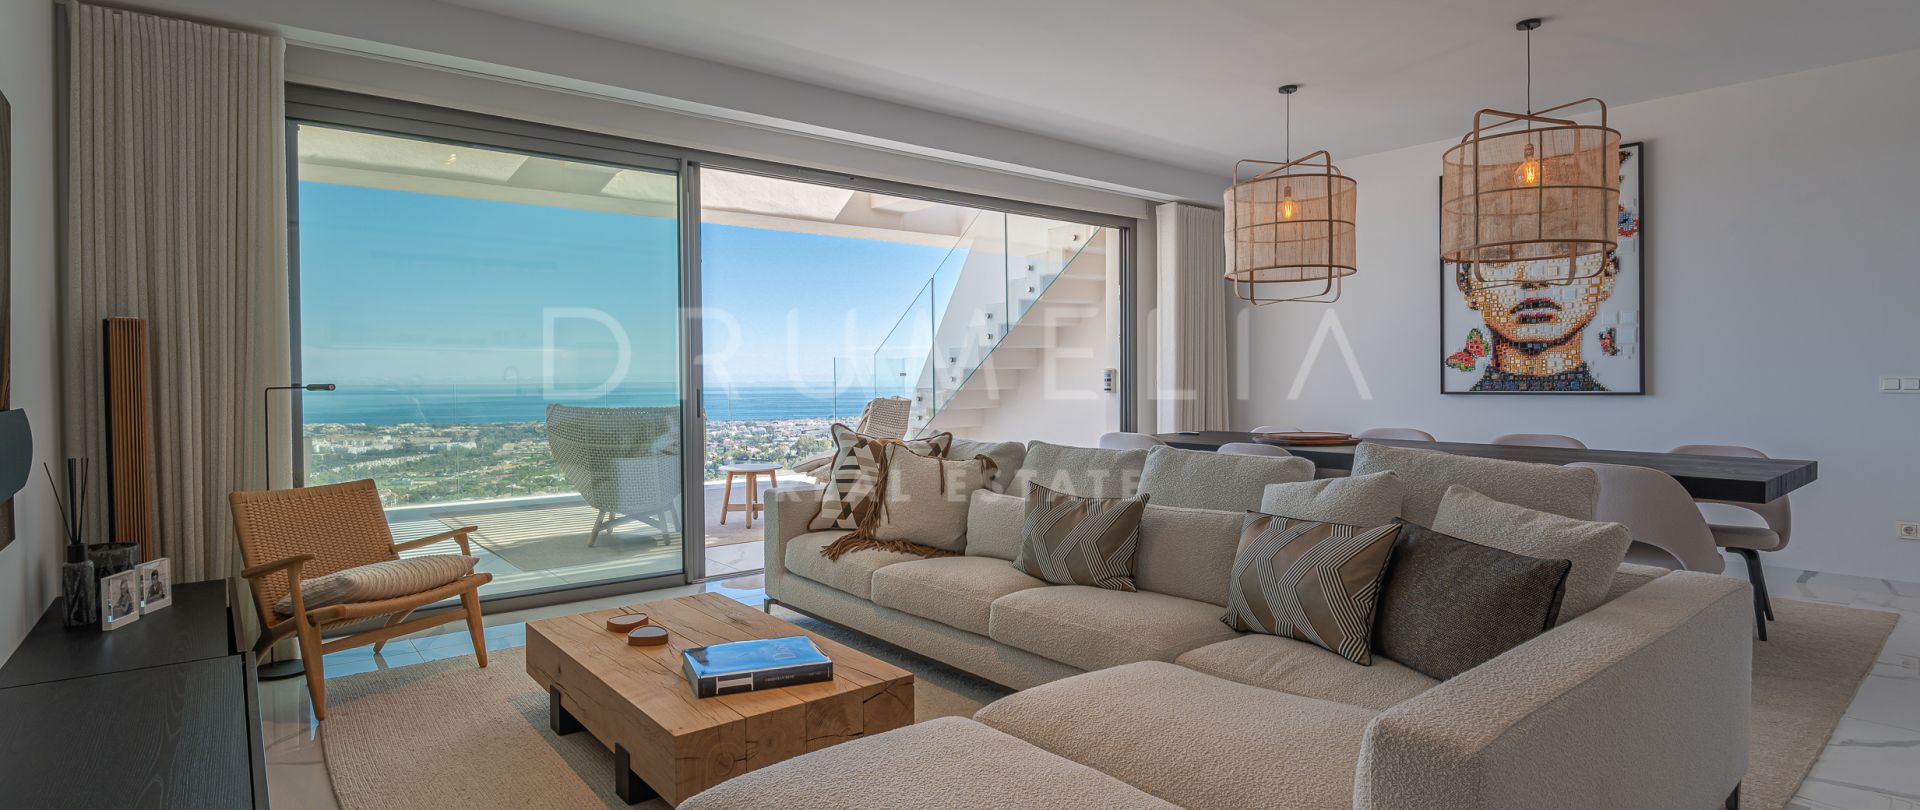 Brand-new stunning modern luxury duplex penthouse with panoramic sea views in Byu Hills, Benahavis